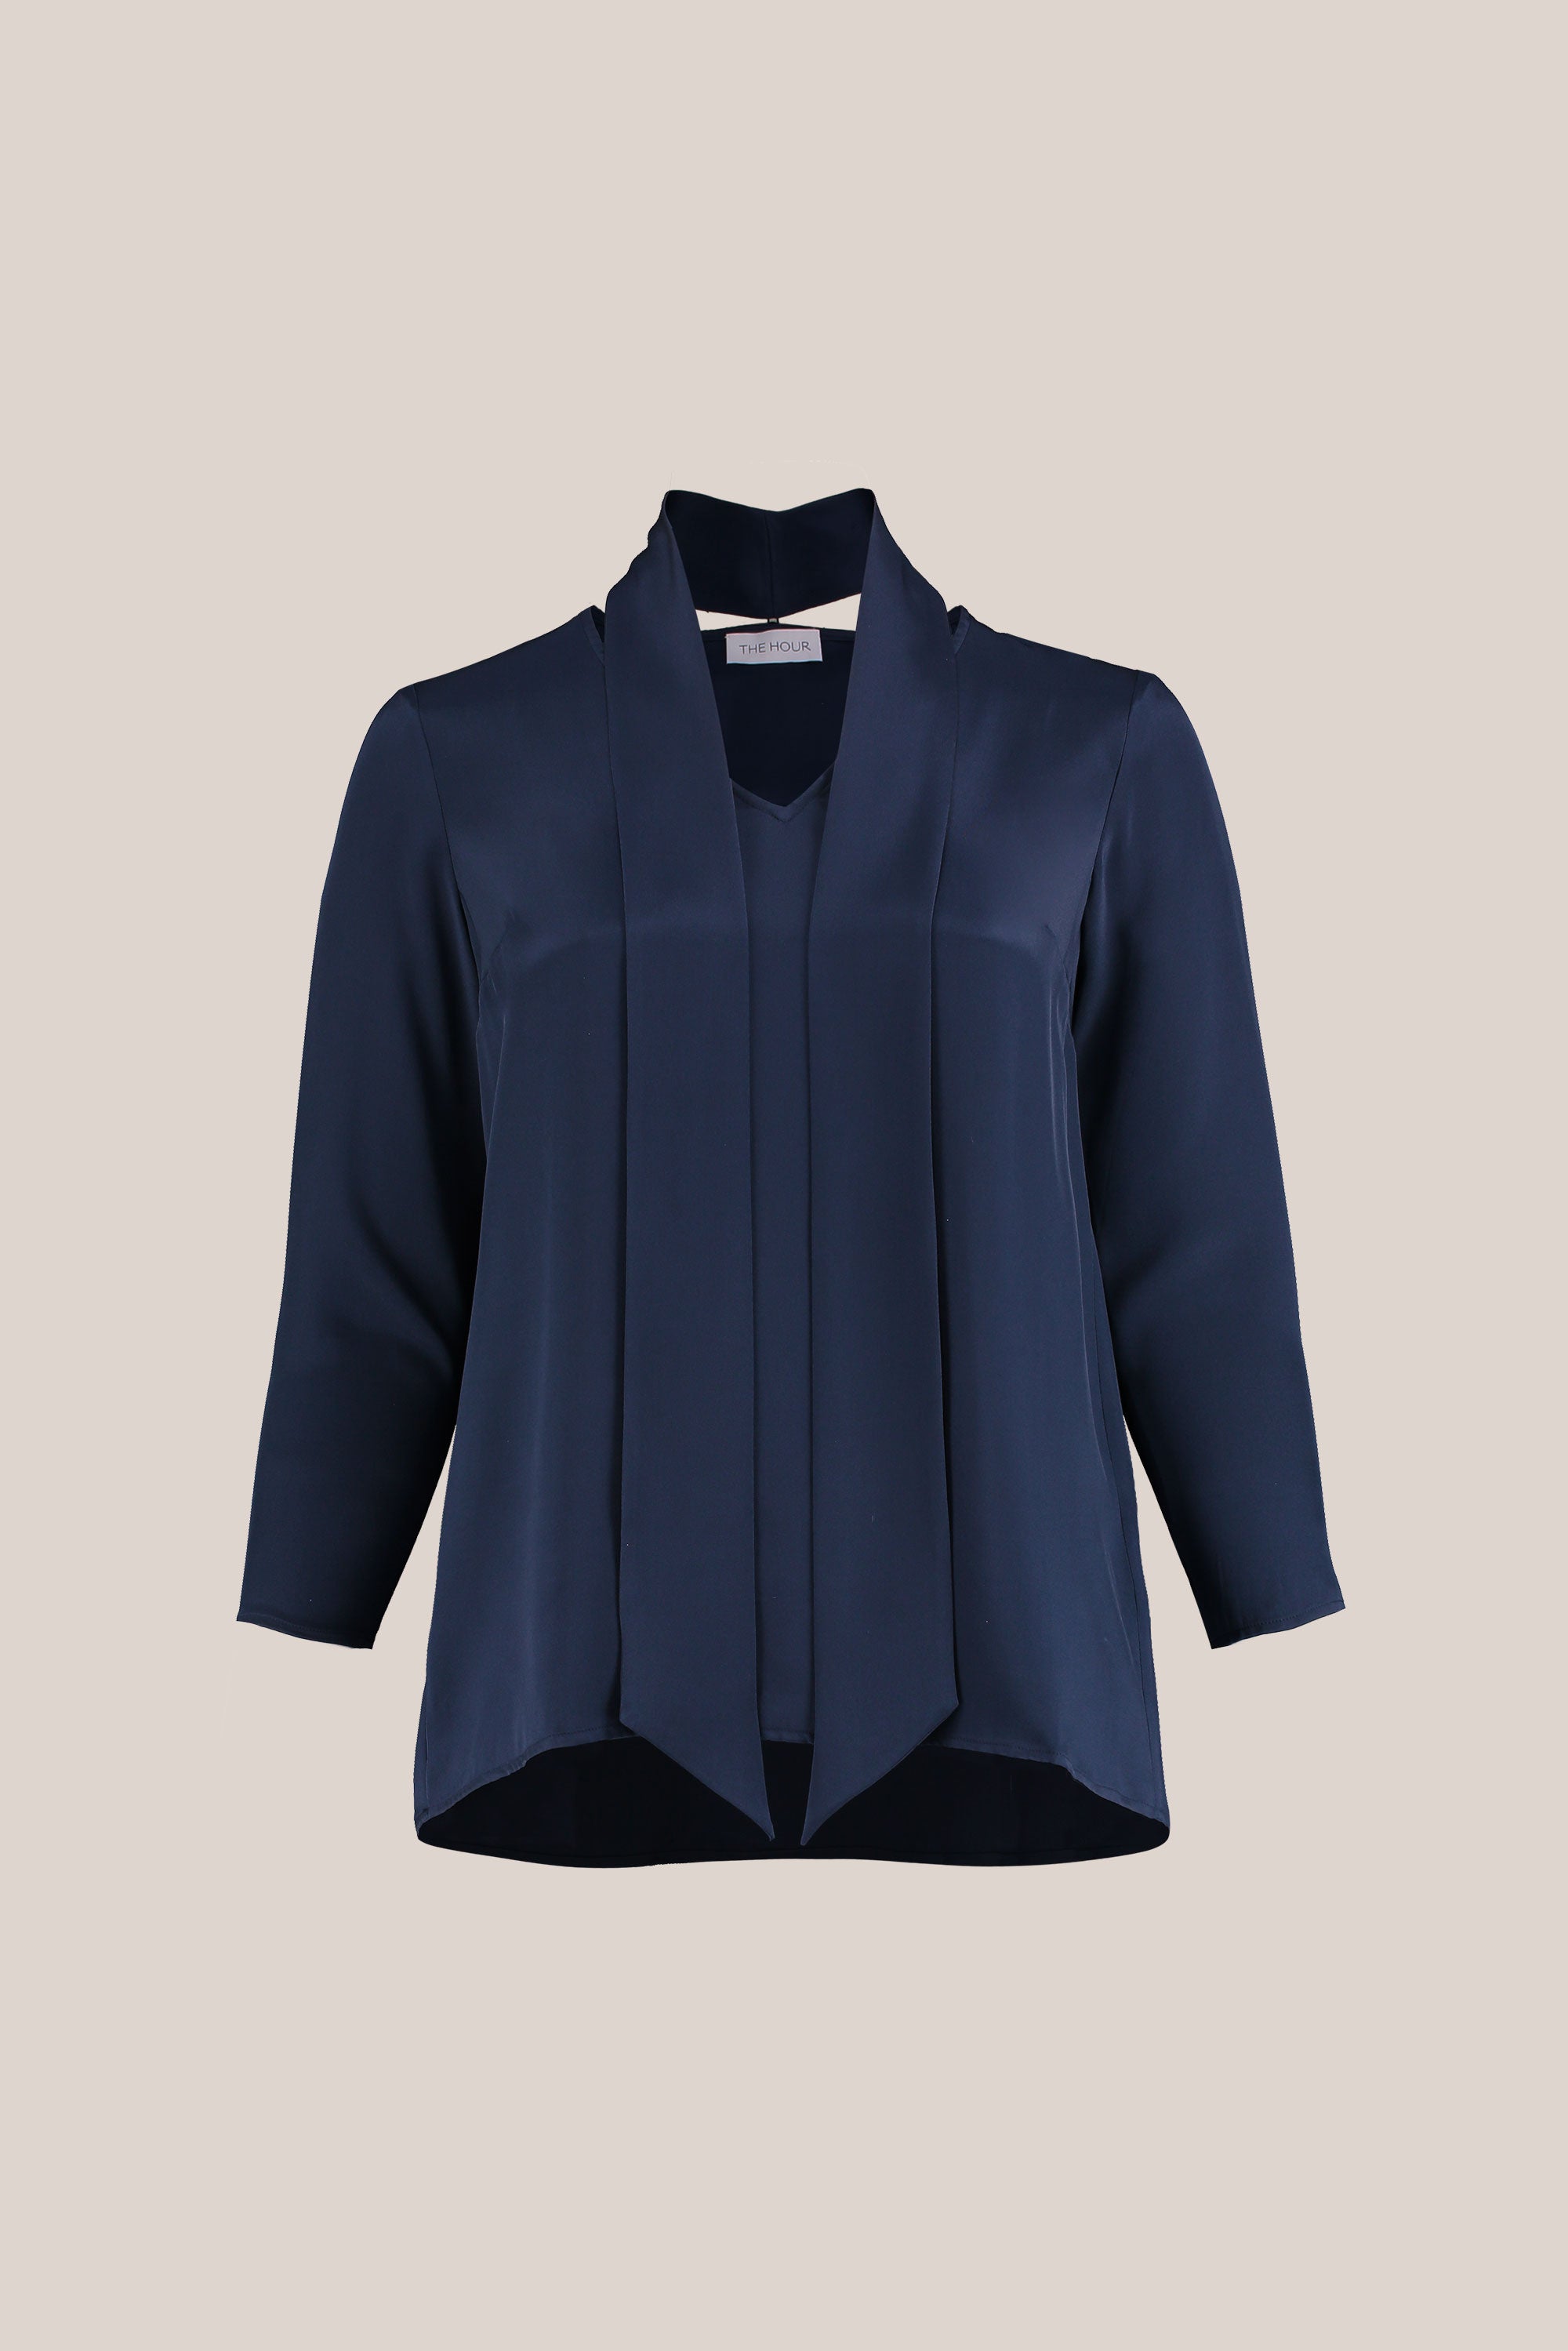 Designer Plus size blue silk top